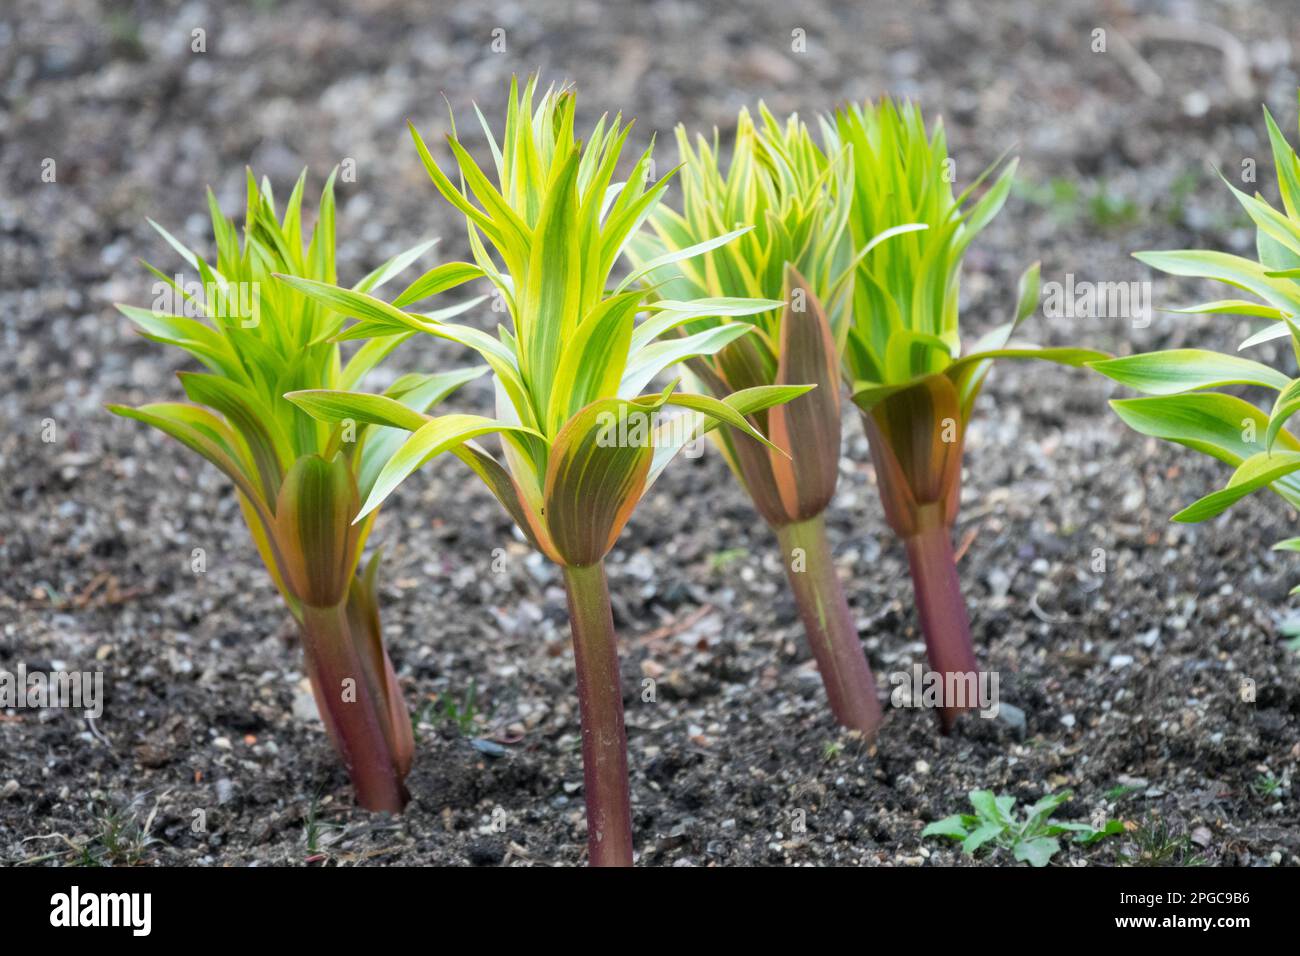 Fritillaria-Triebe, Pflanzen, Kronenfritillar, Fritillaria imperialis Aureomarginata, Fritillar, Anschwellen, Frühling, Gärtnereichen Stockfoto